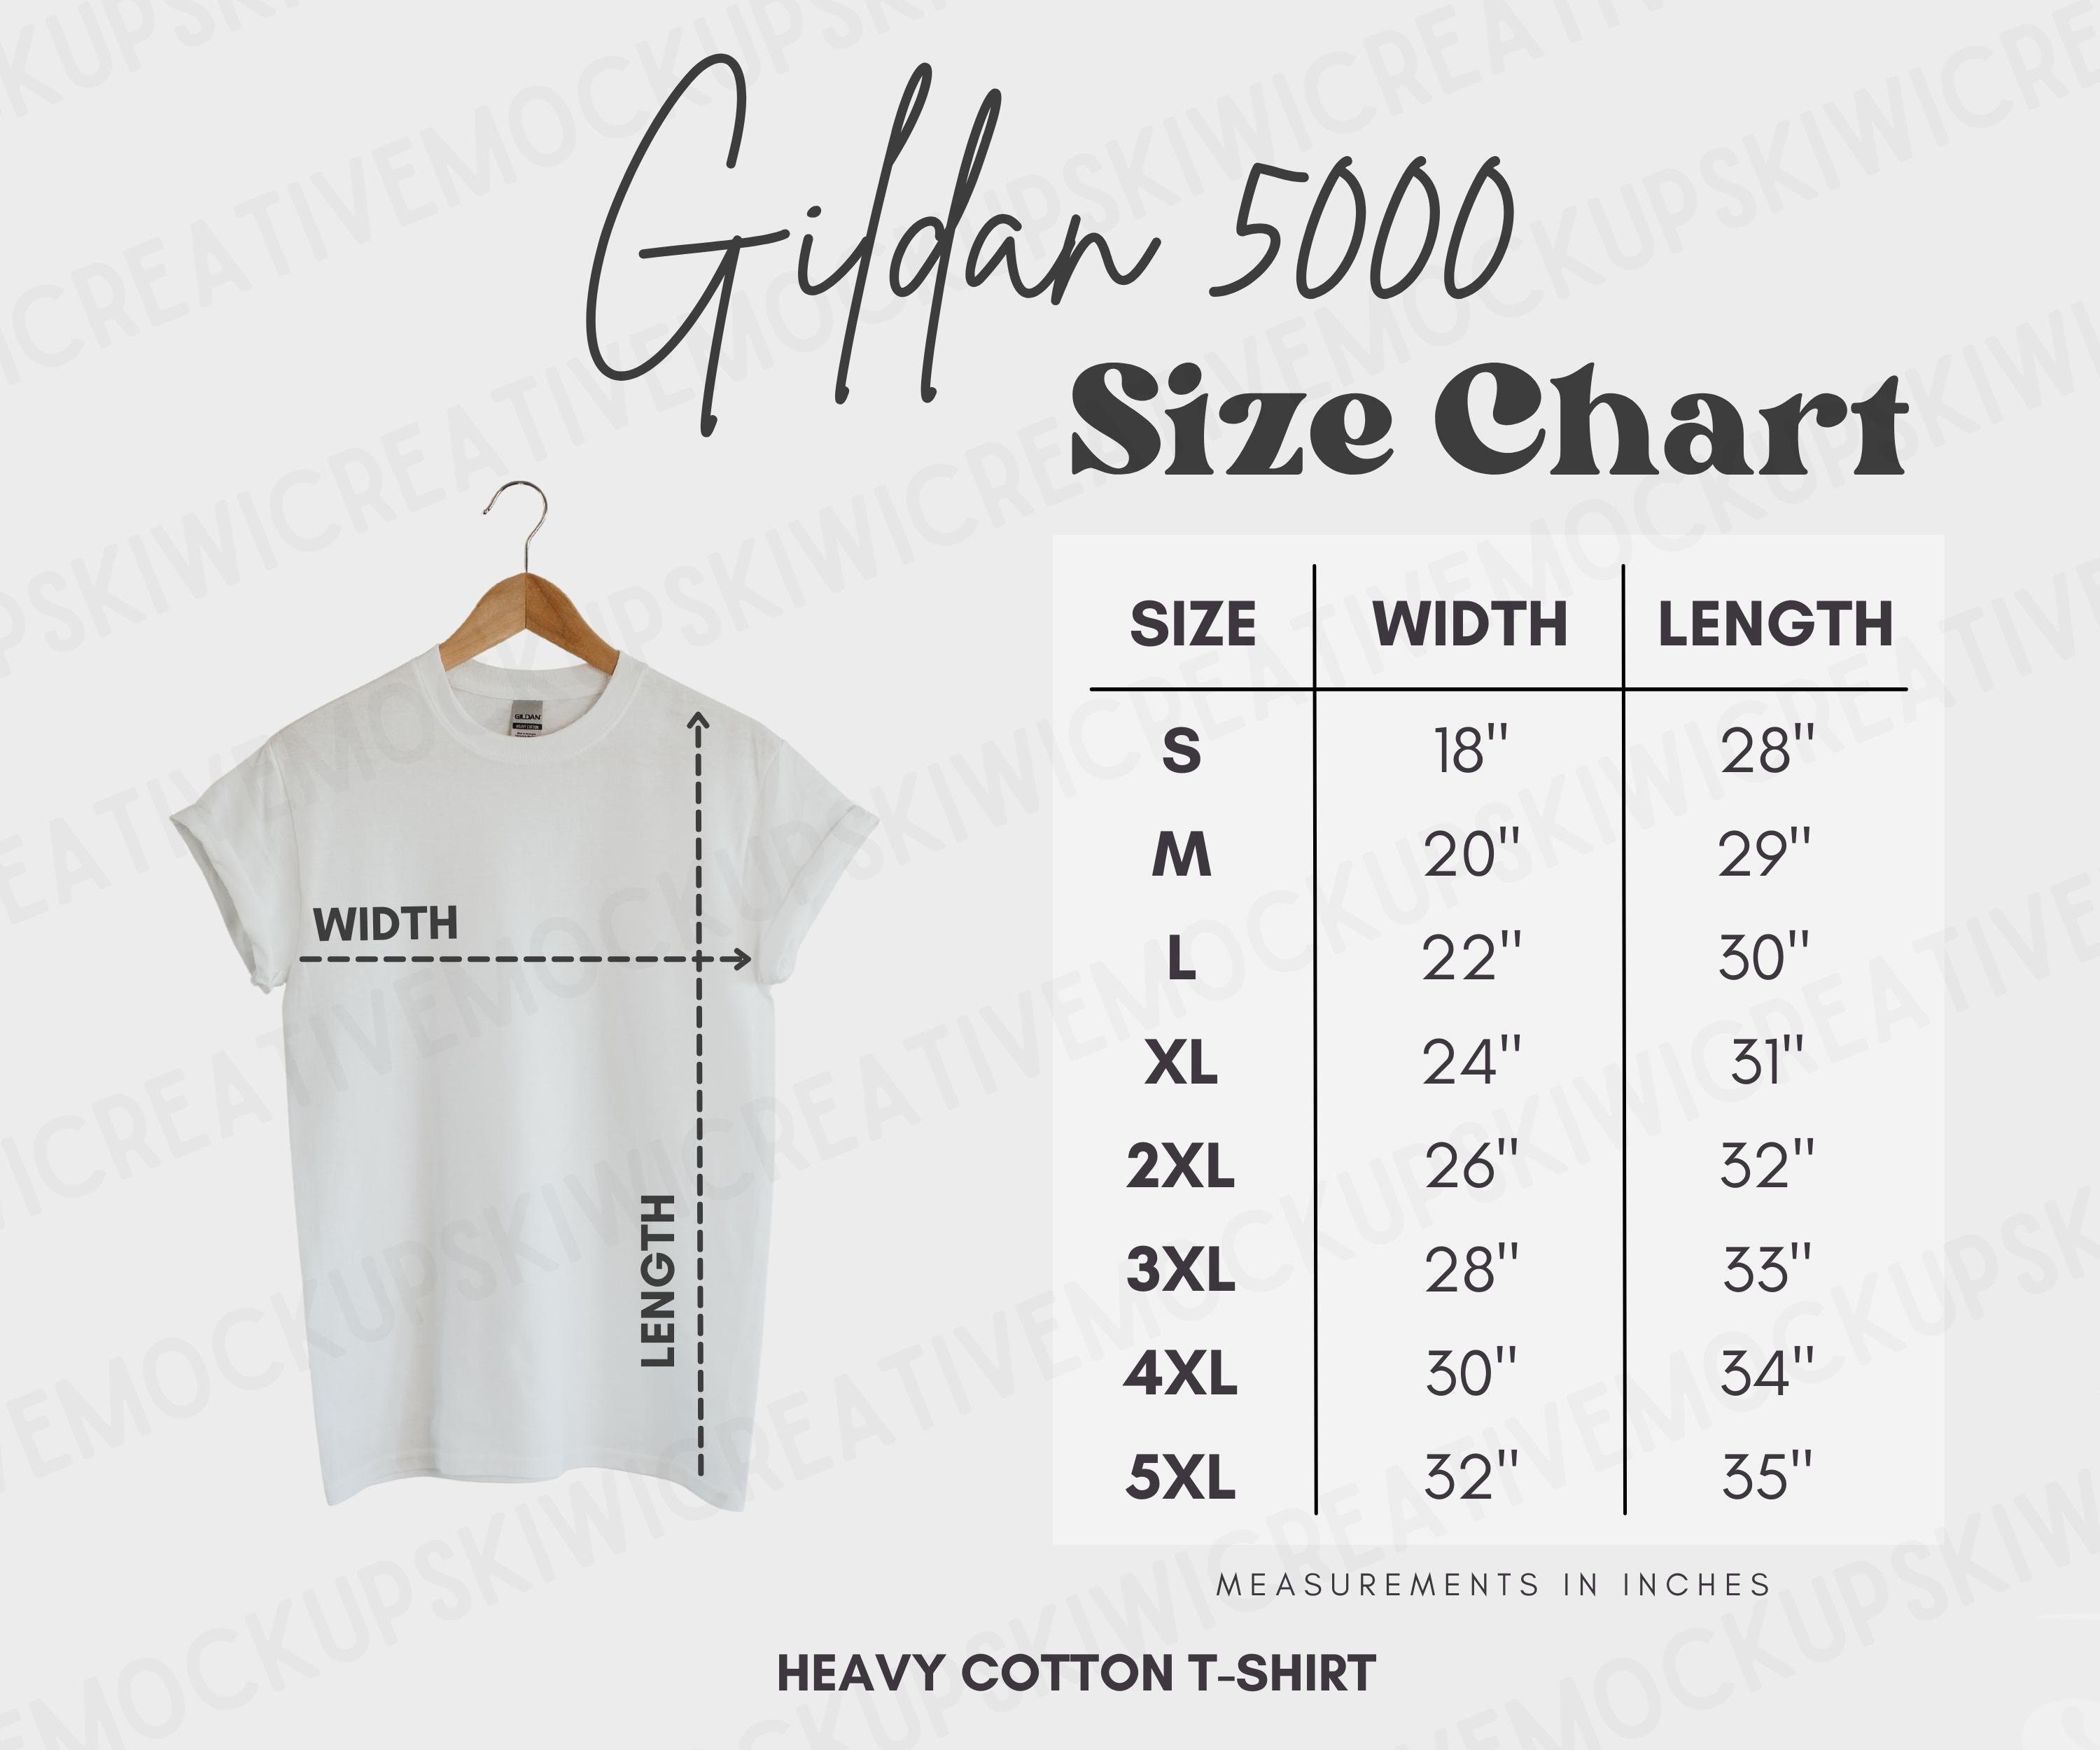 GILDAN 5000 Size Chart Guide T-Shirt Size Chart G5000 | canoeracing.org.uk